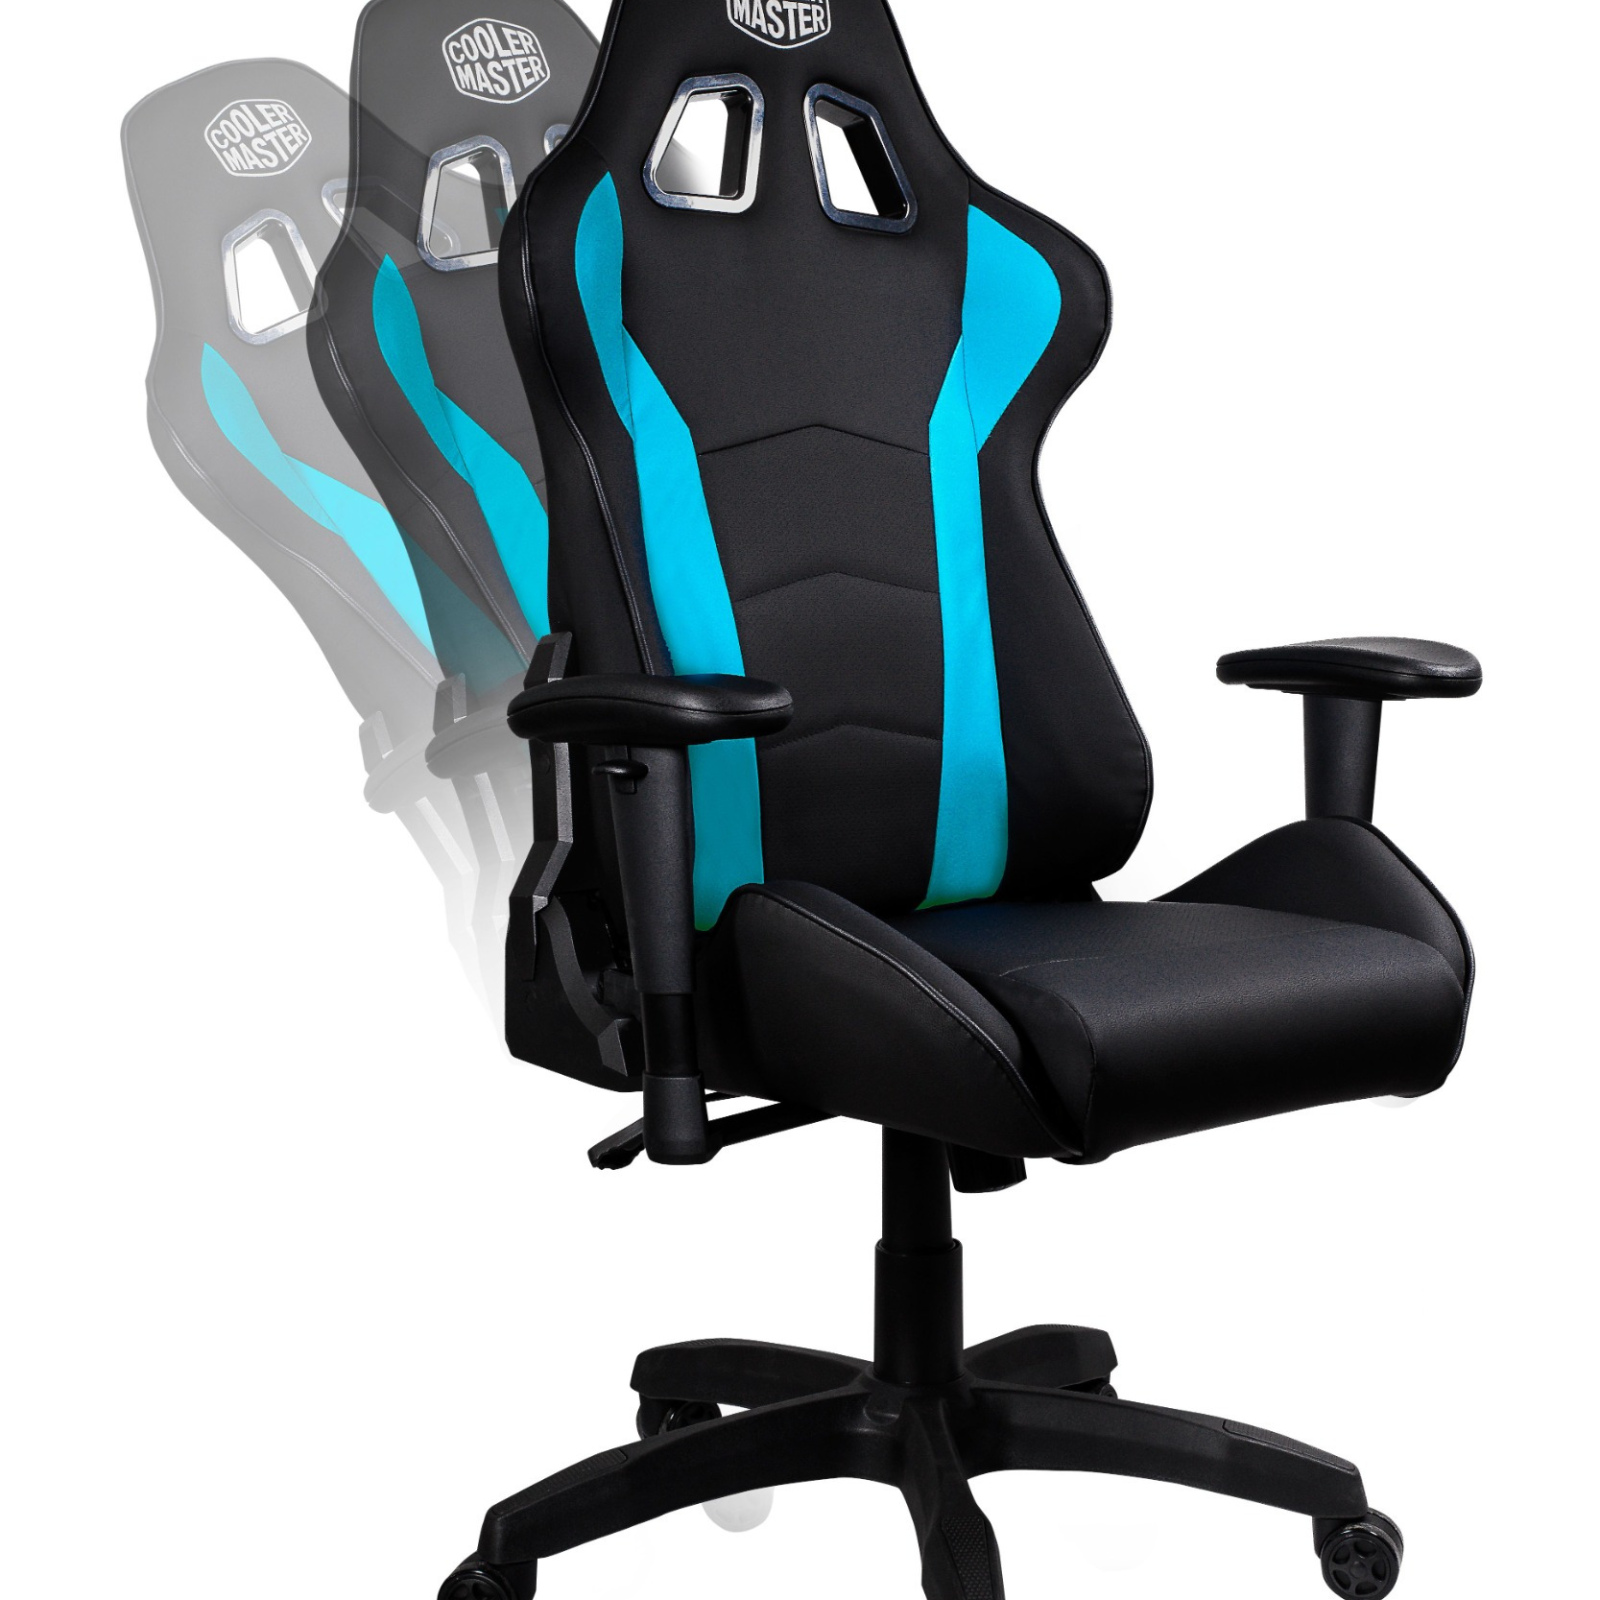 Black-Blue, gaming chair, Cooler Master, Caliber R1 